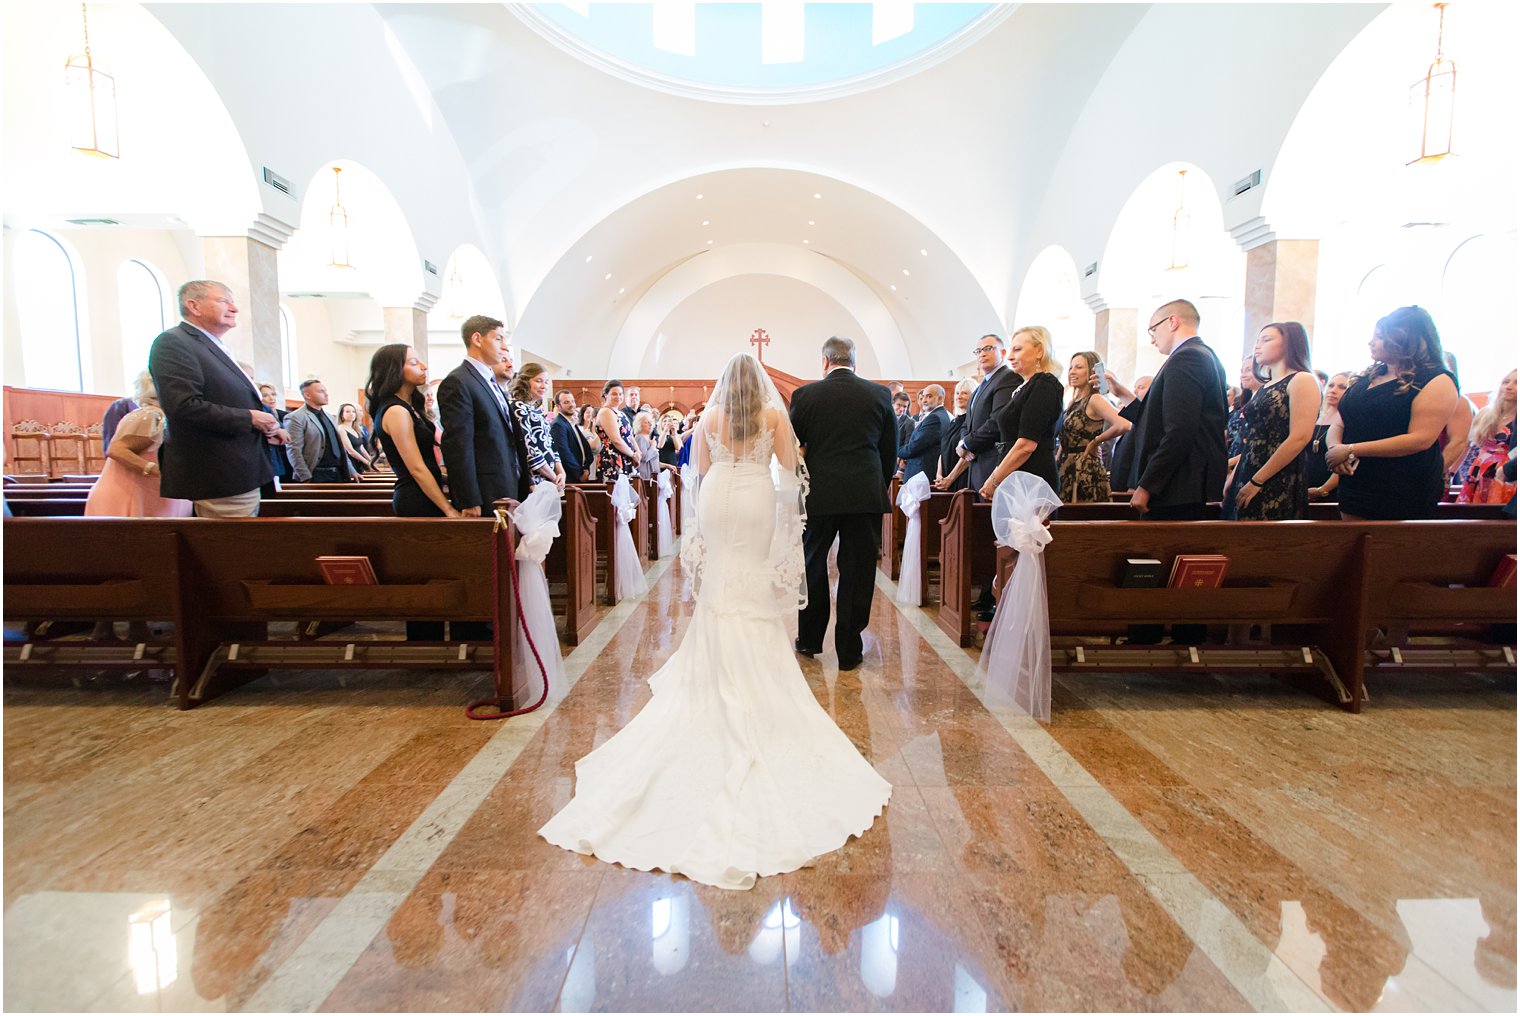 Greek wedding ceremony at St. George Greek Orthodox Church in Ocean Township, NJ